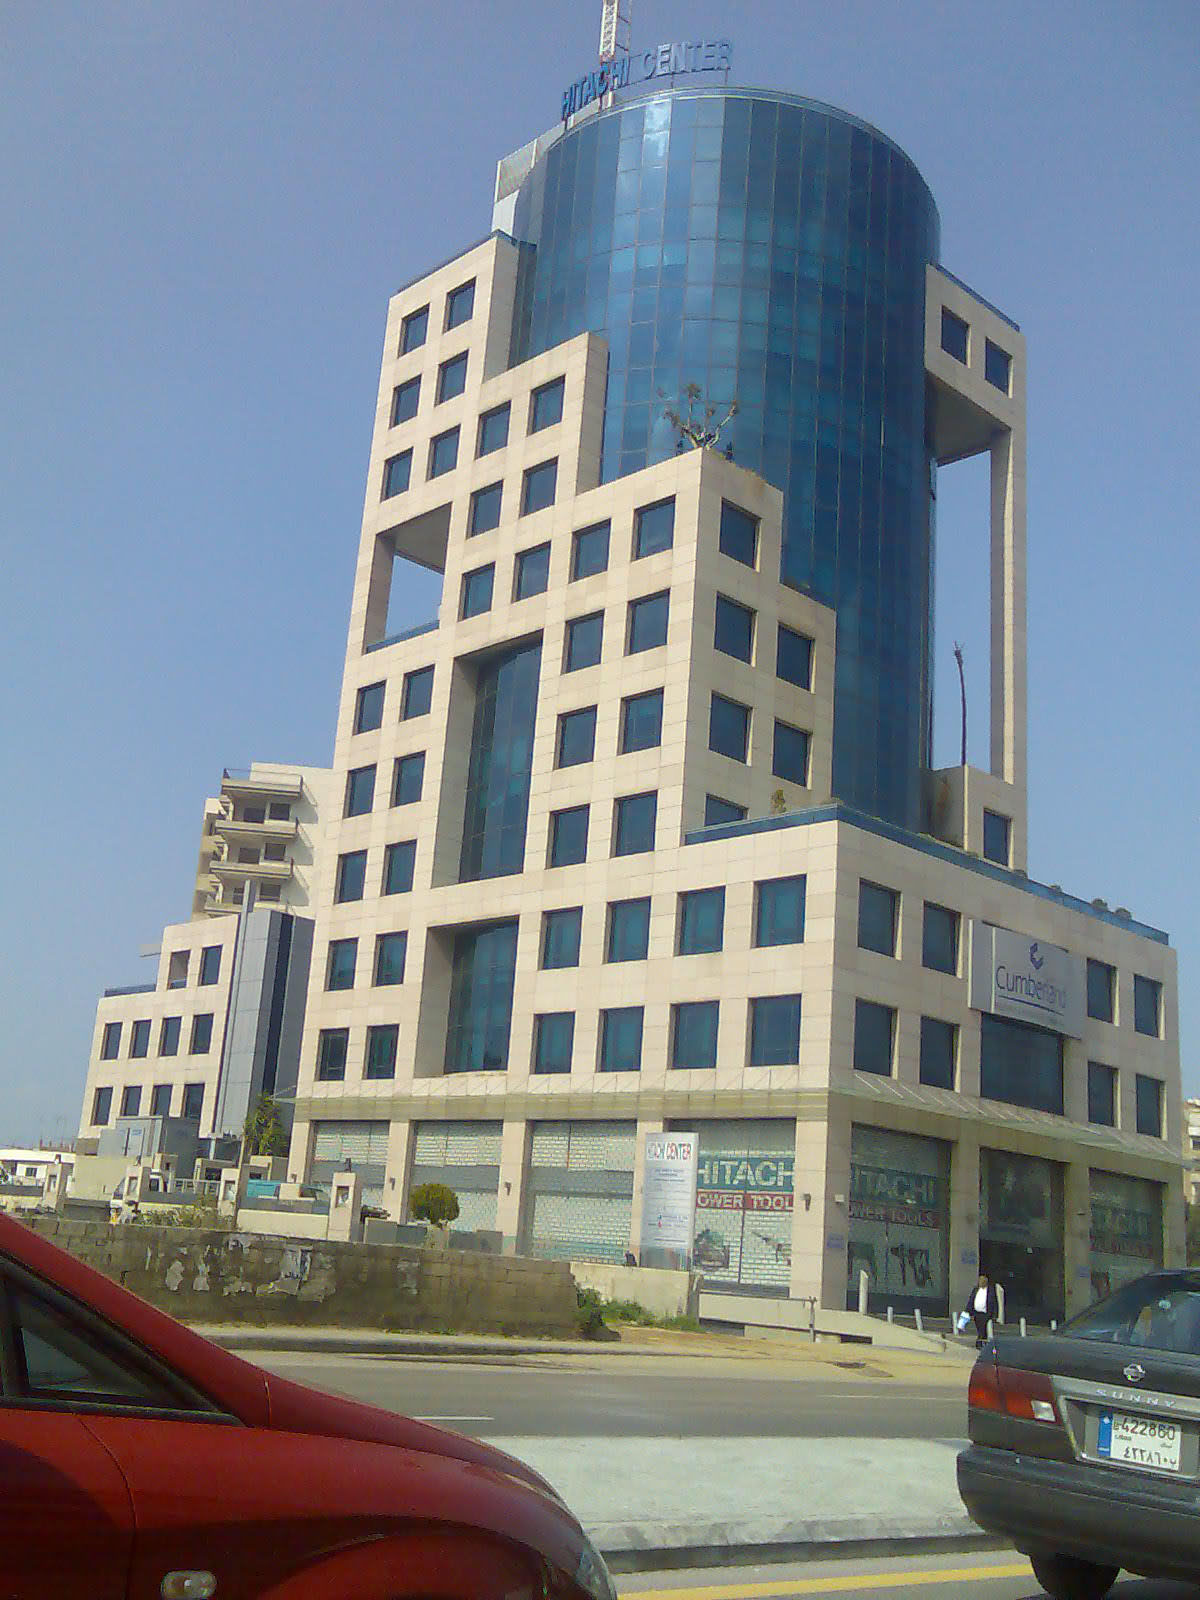 Hitachi Center - Lebanon